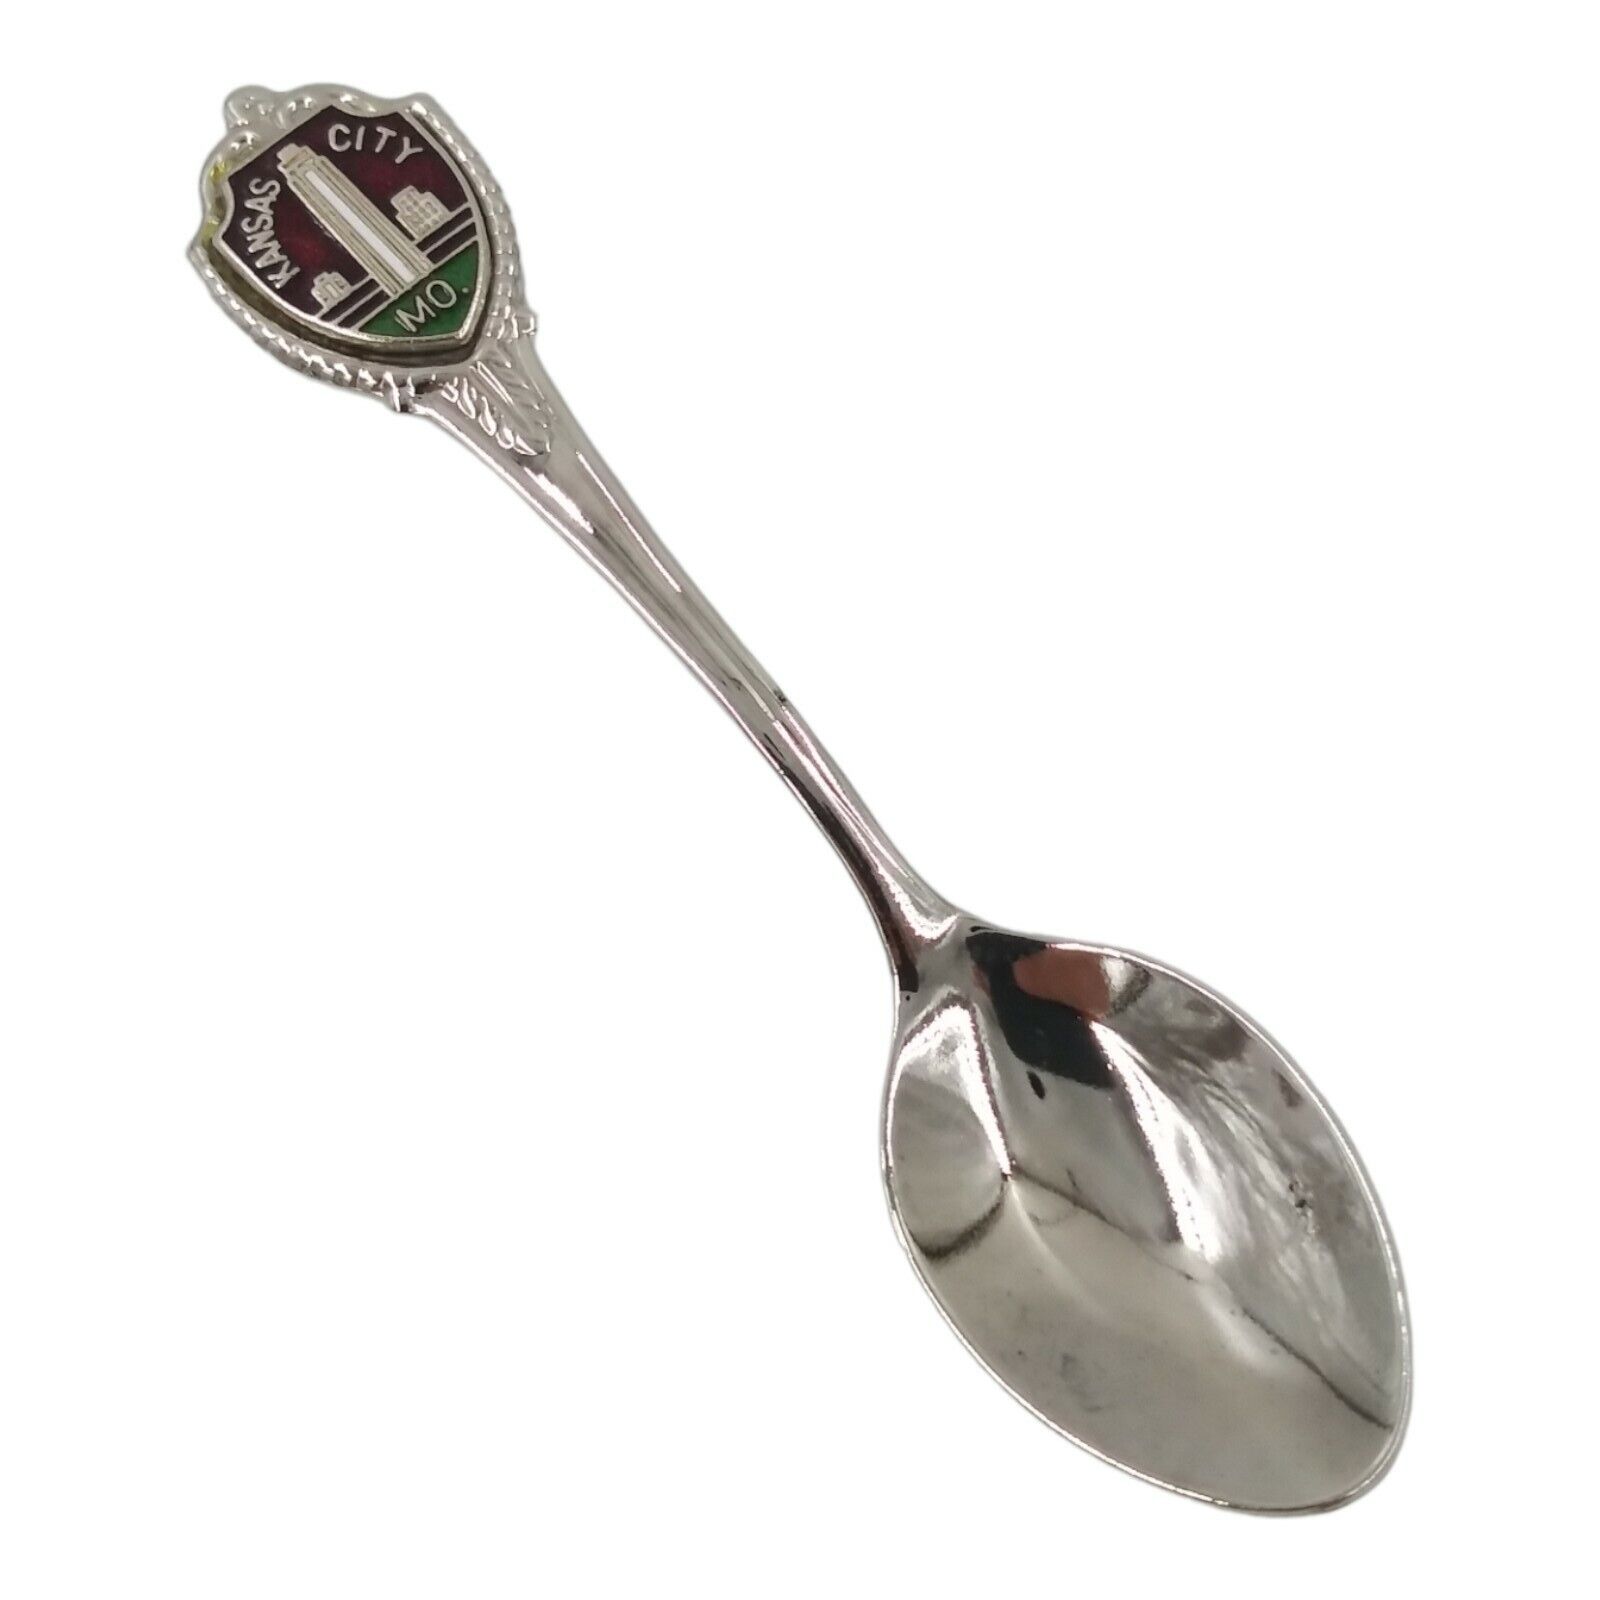 Vintage Kansas City Missouri Souvenir Spoon US Collectible